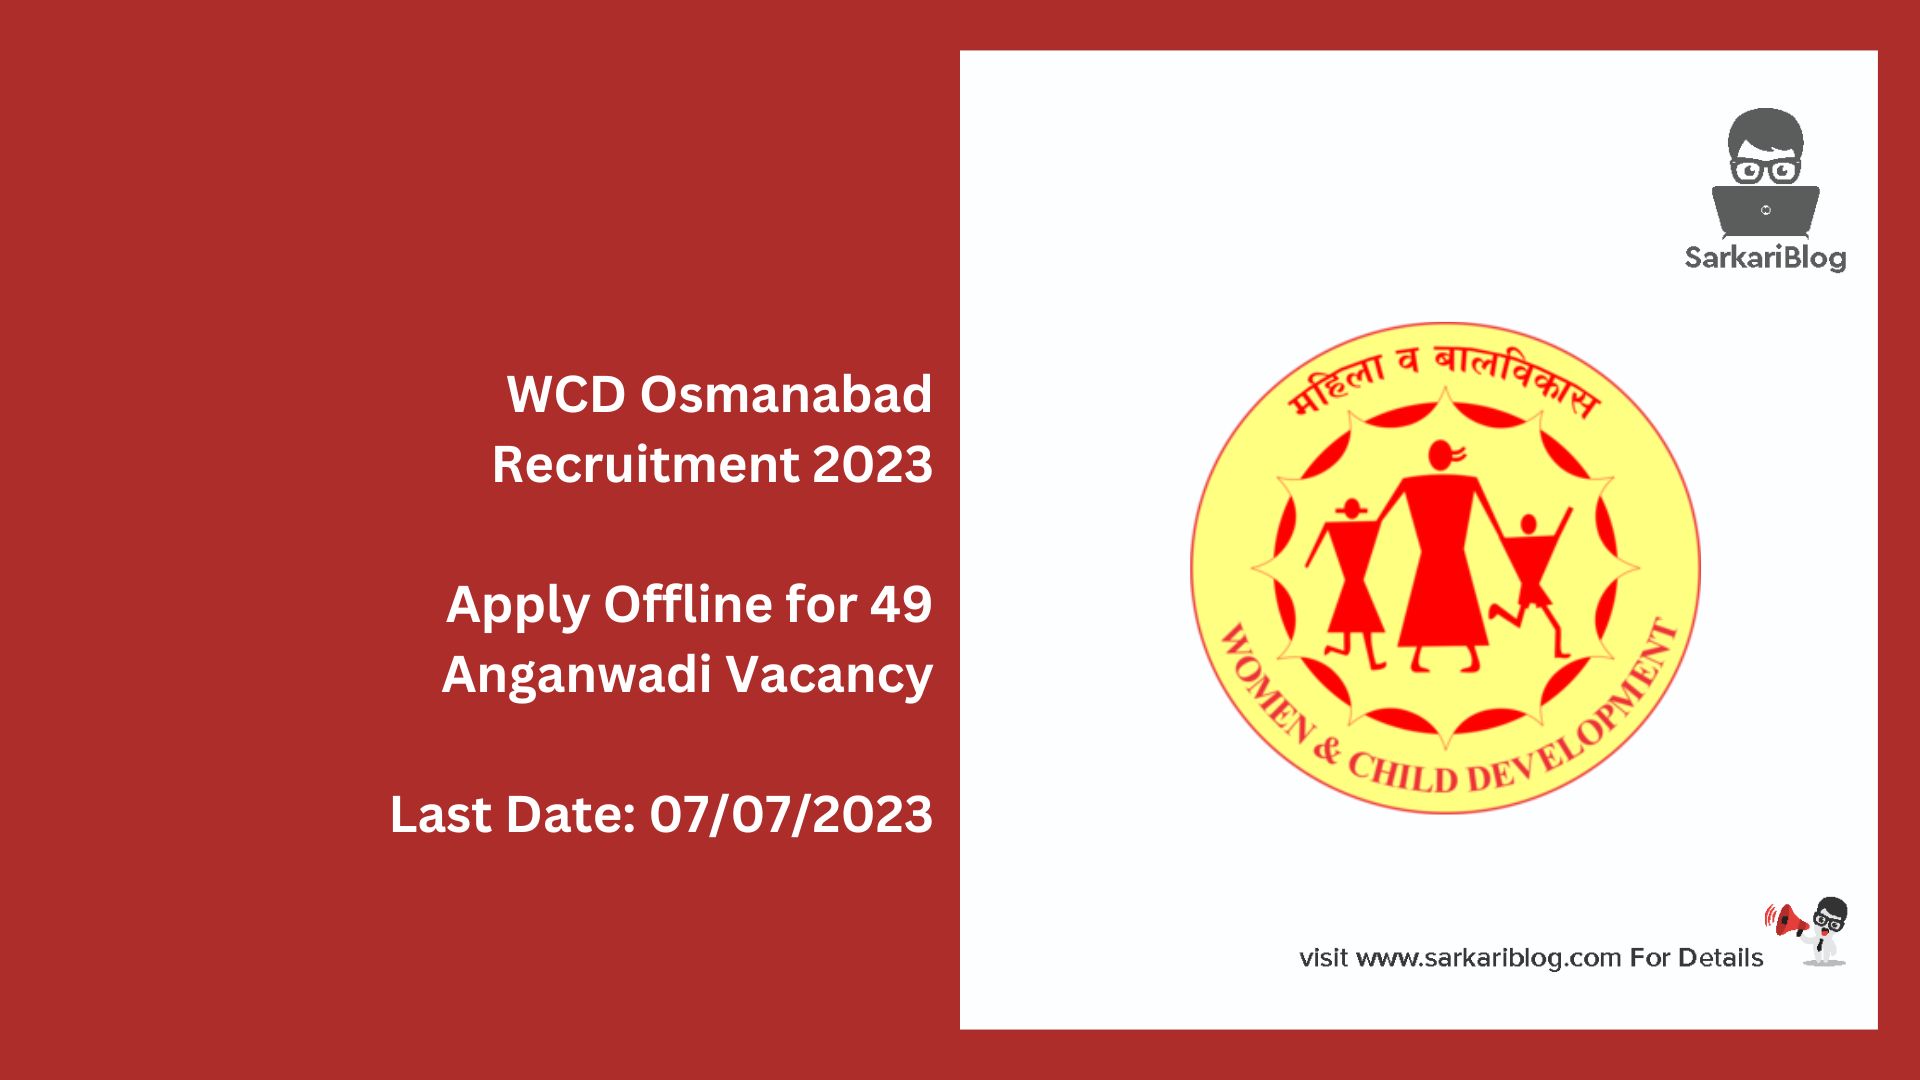 WCD Osmanabad Recruitment 2023